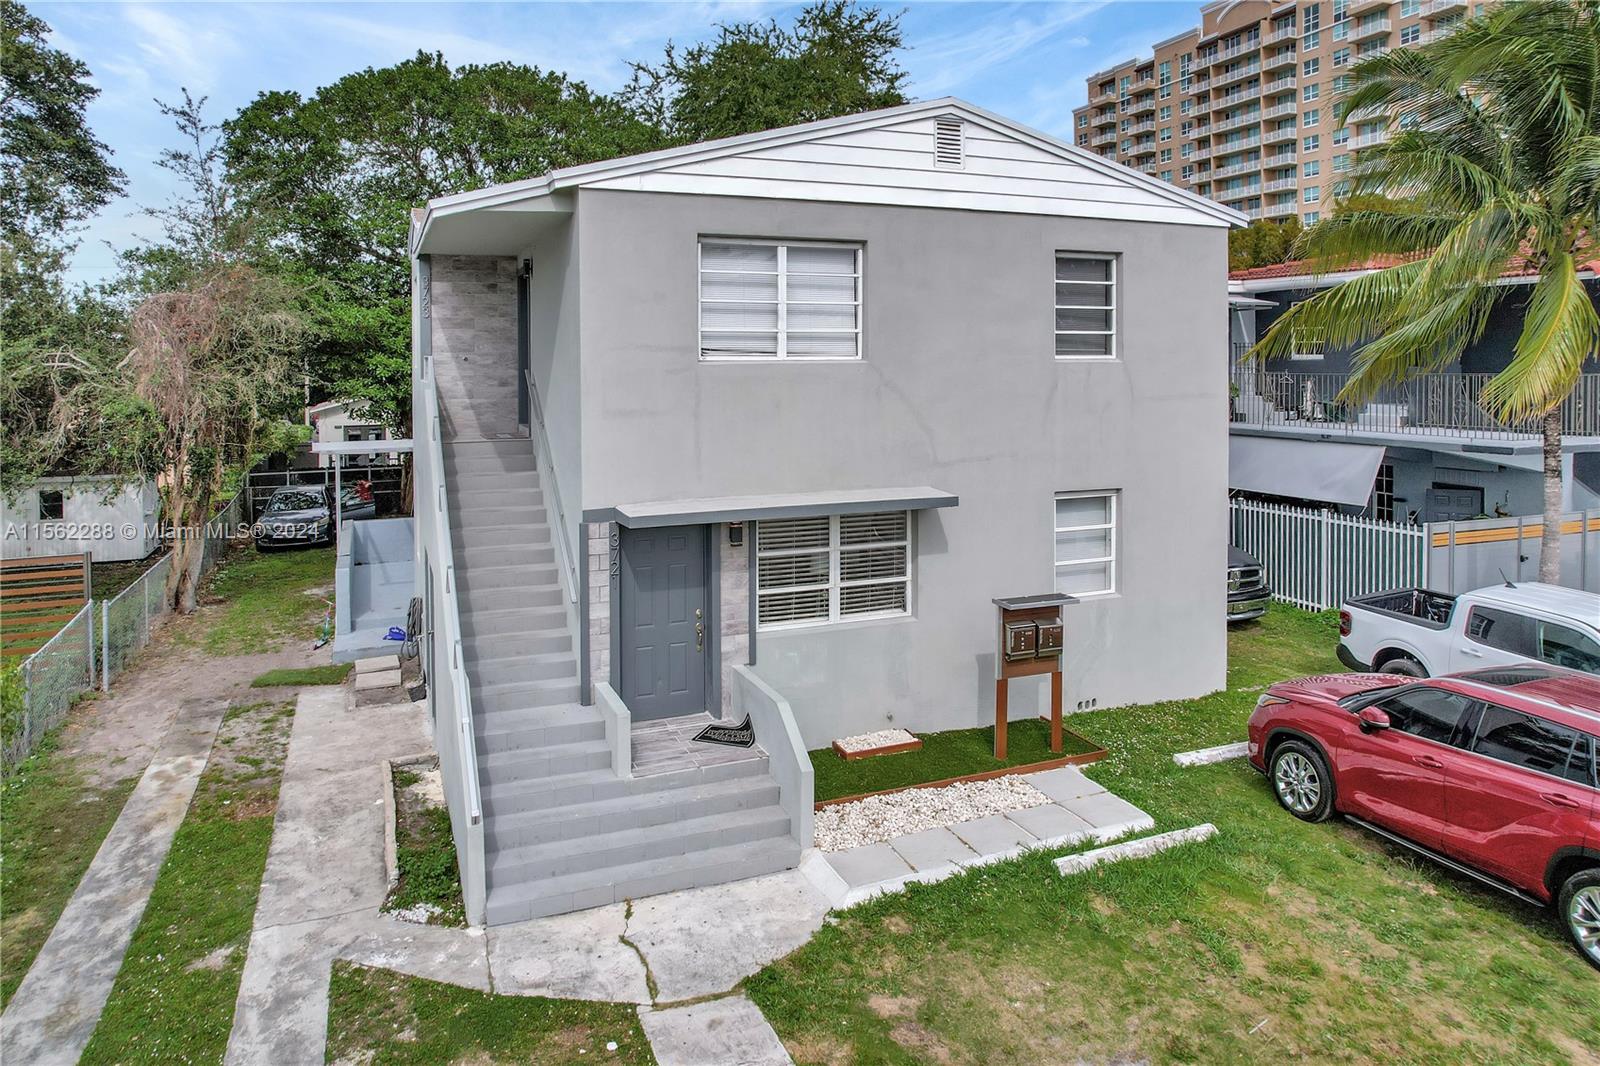 Rental Property at 3721 Sw 27th Ter Ter, Miami, Broward County, Florida -  - $1,525,000 MO.